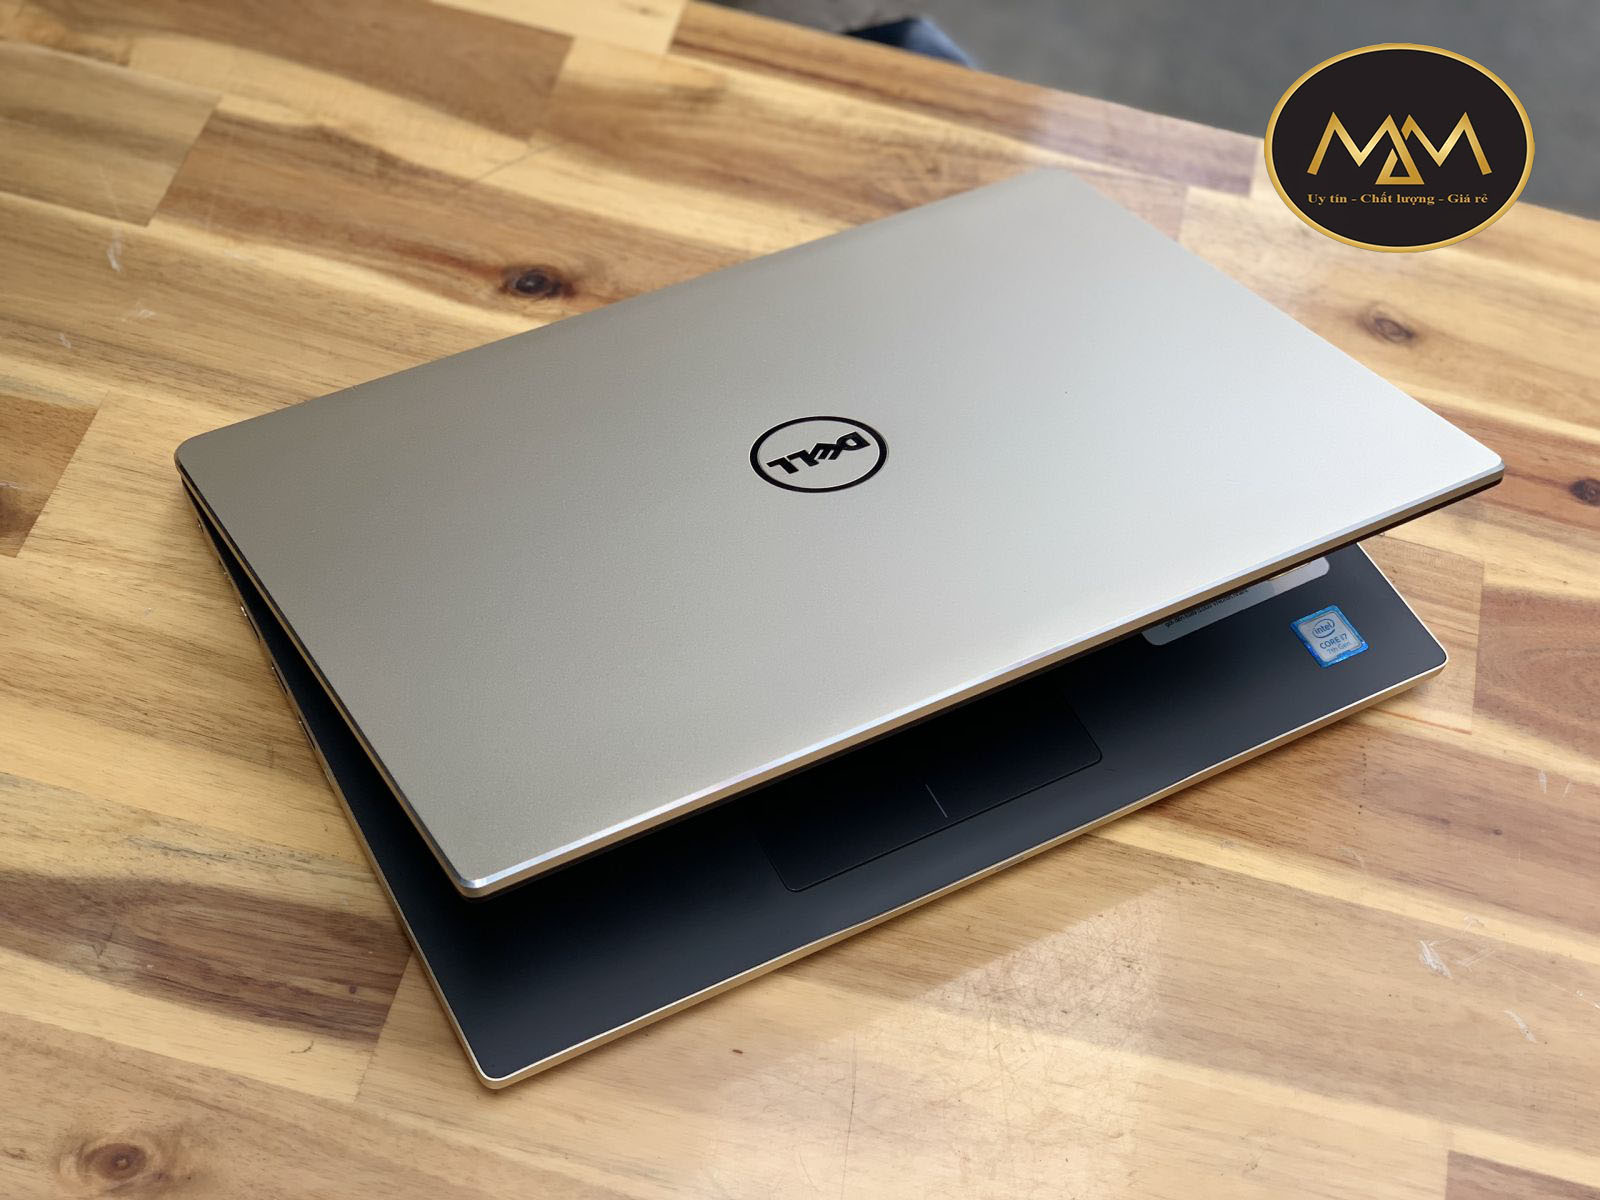 Top-10-mau-laptop-Dell-danh-cho-ke-toan